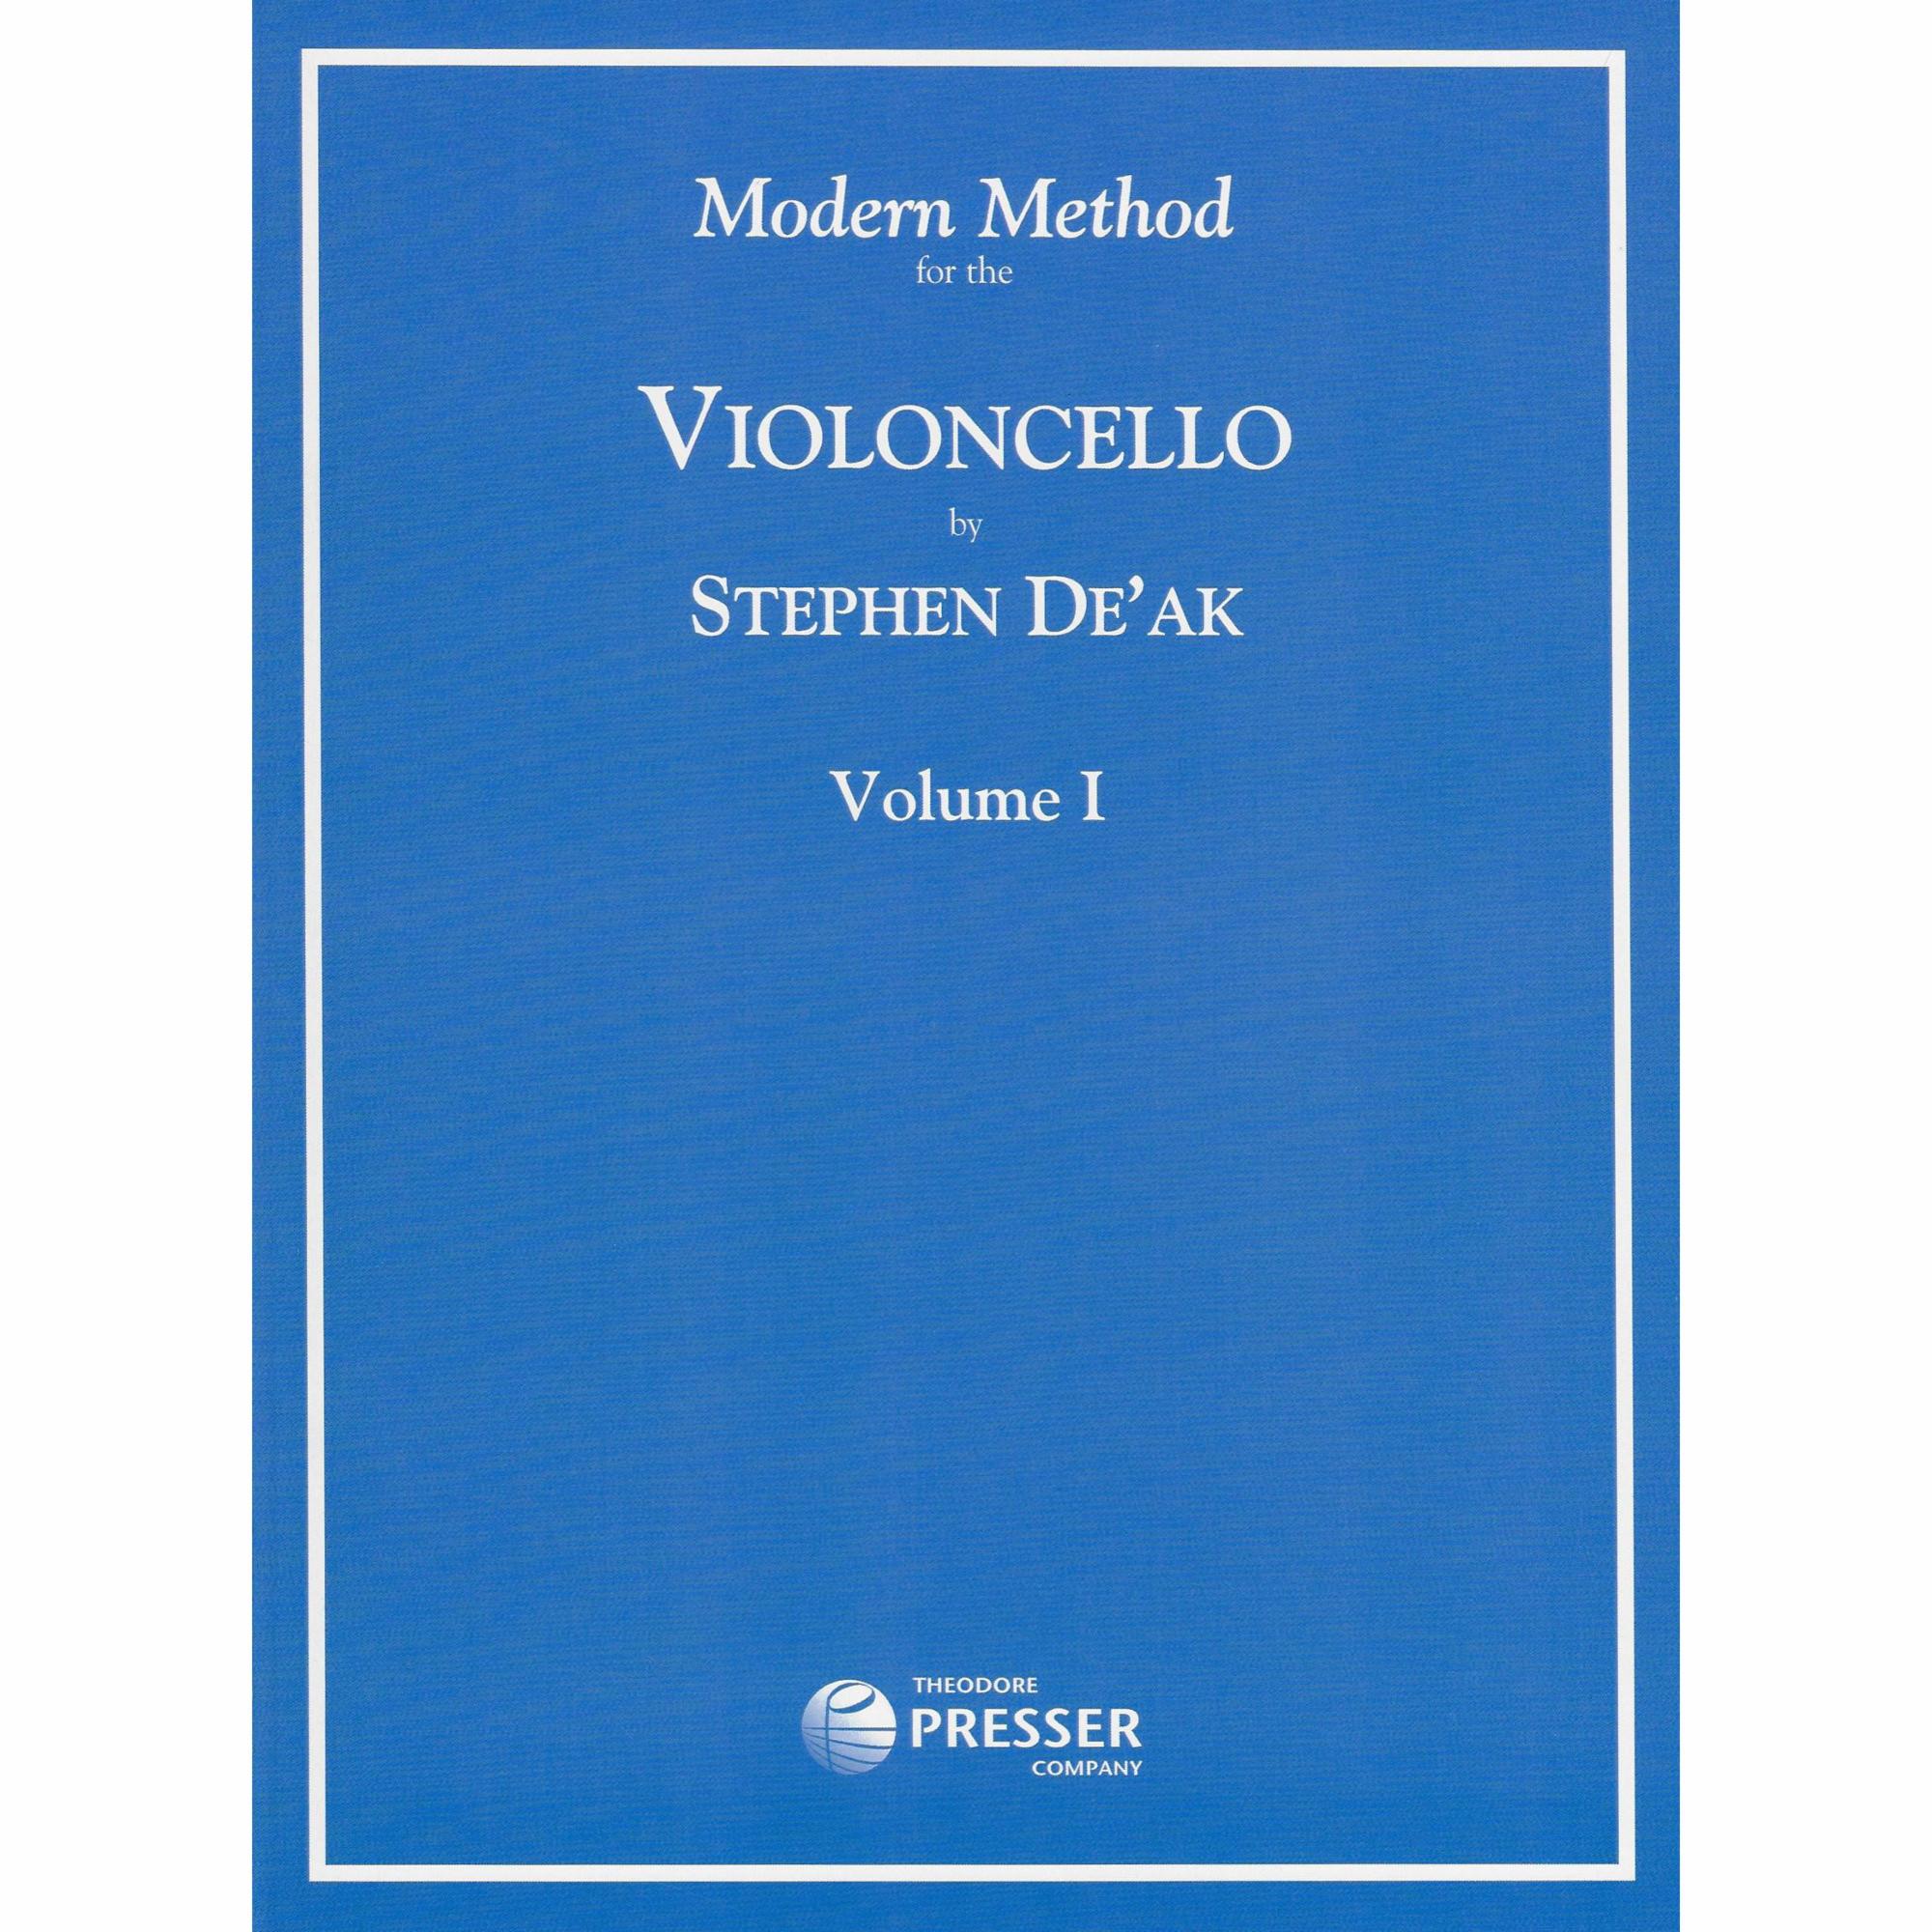 Deak -- Modern Method for the Violoncello, Vols. I-II